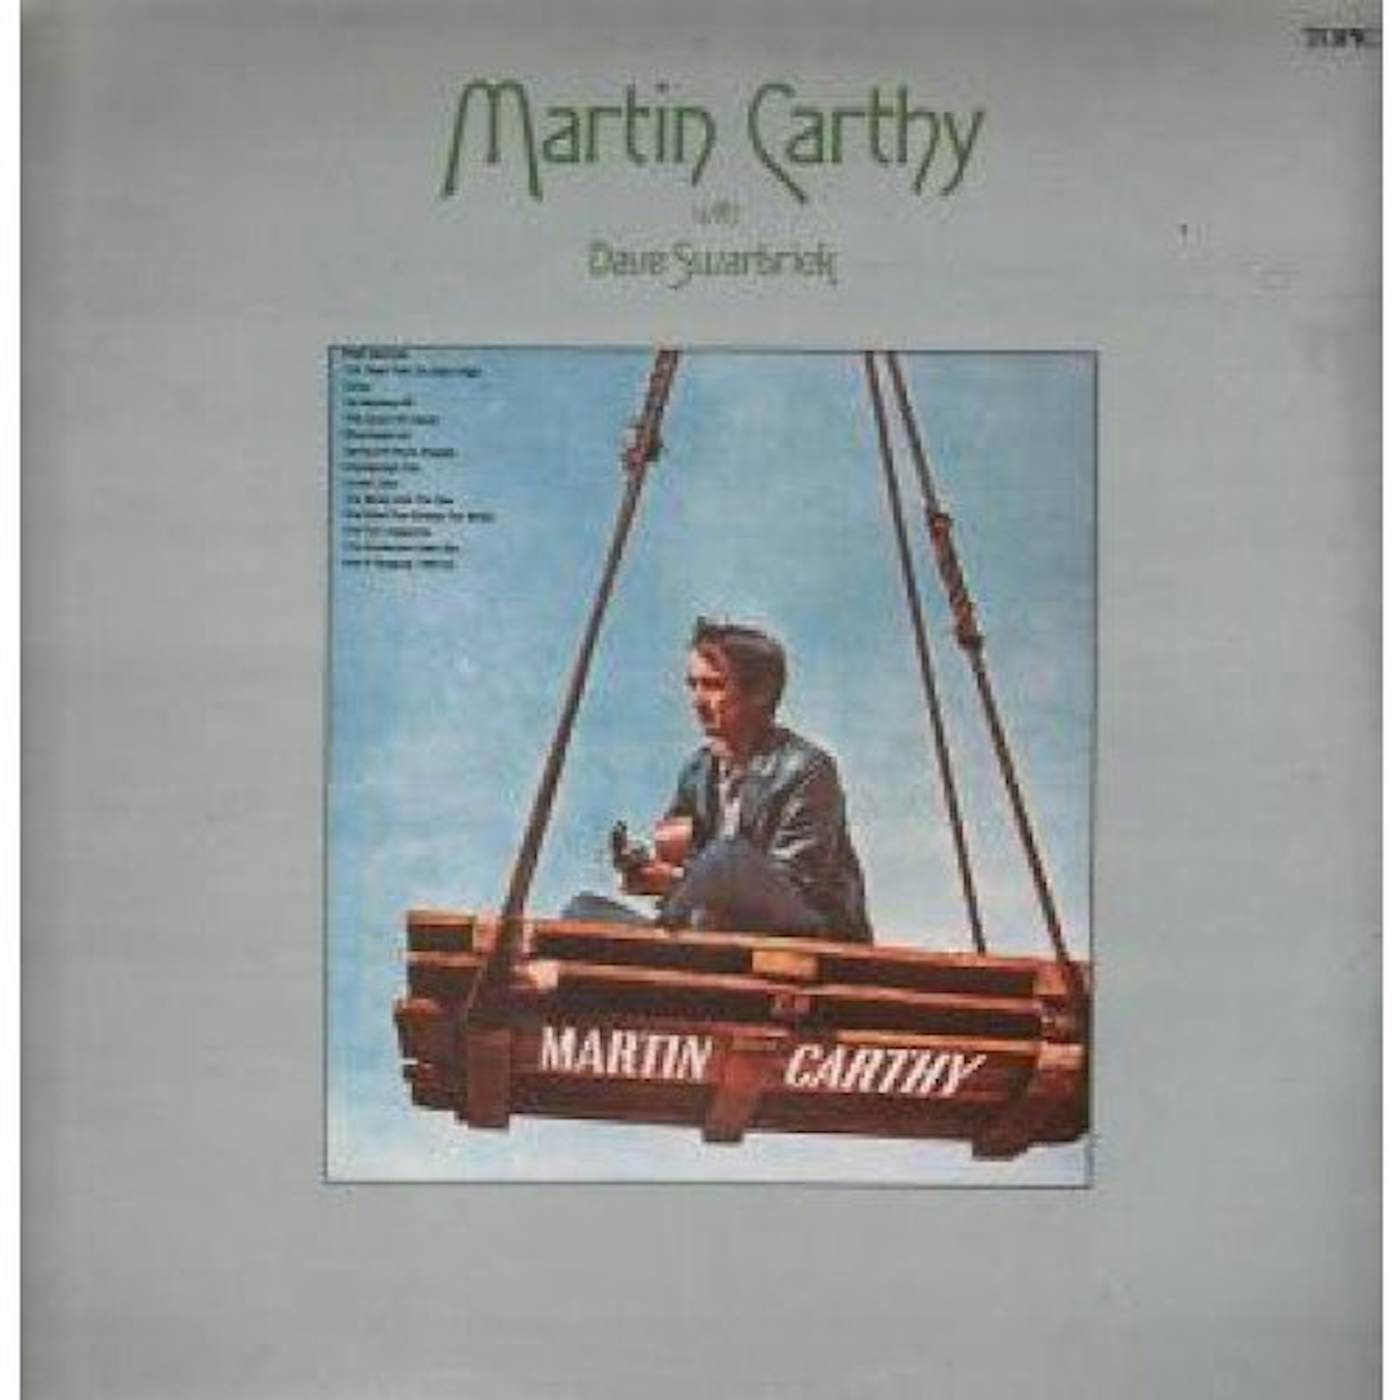 MARTIN CARTHY Vinyl Record - UK Release